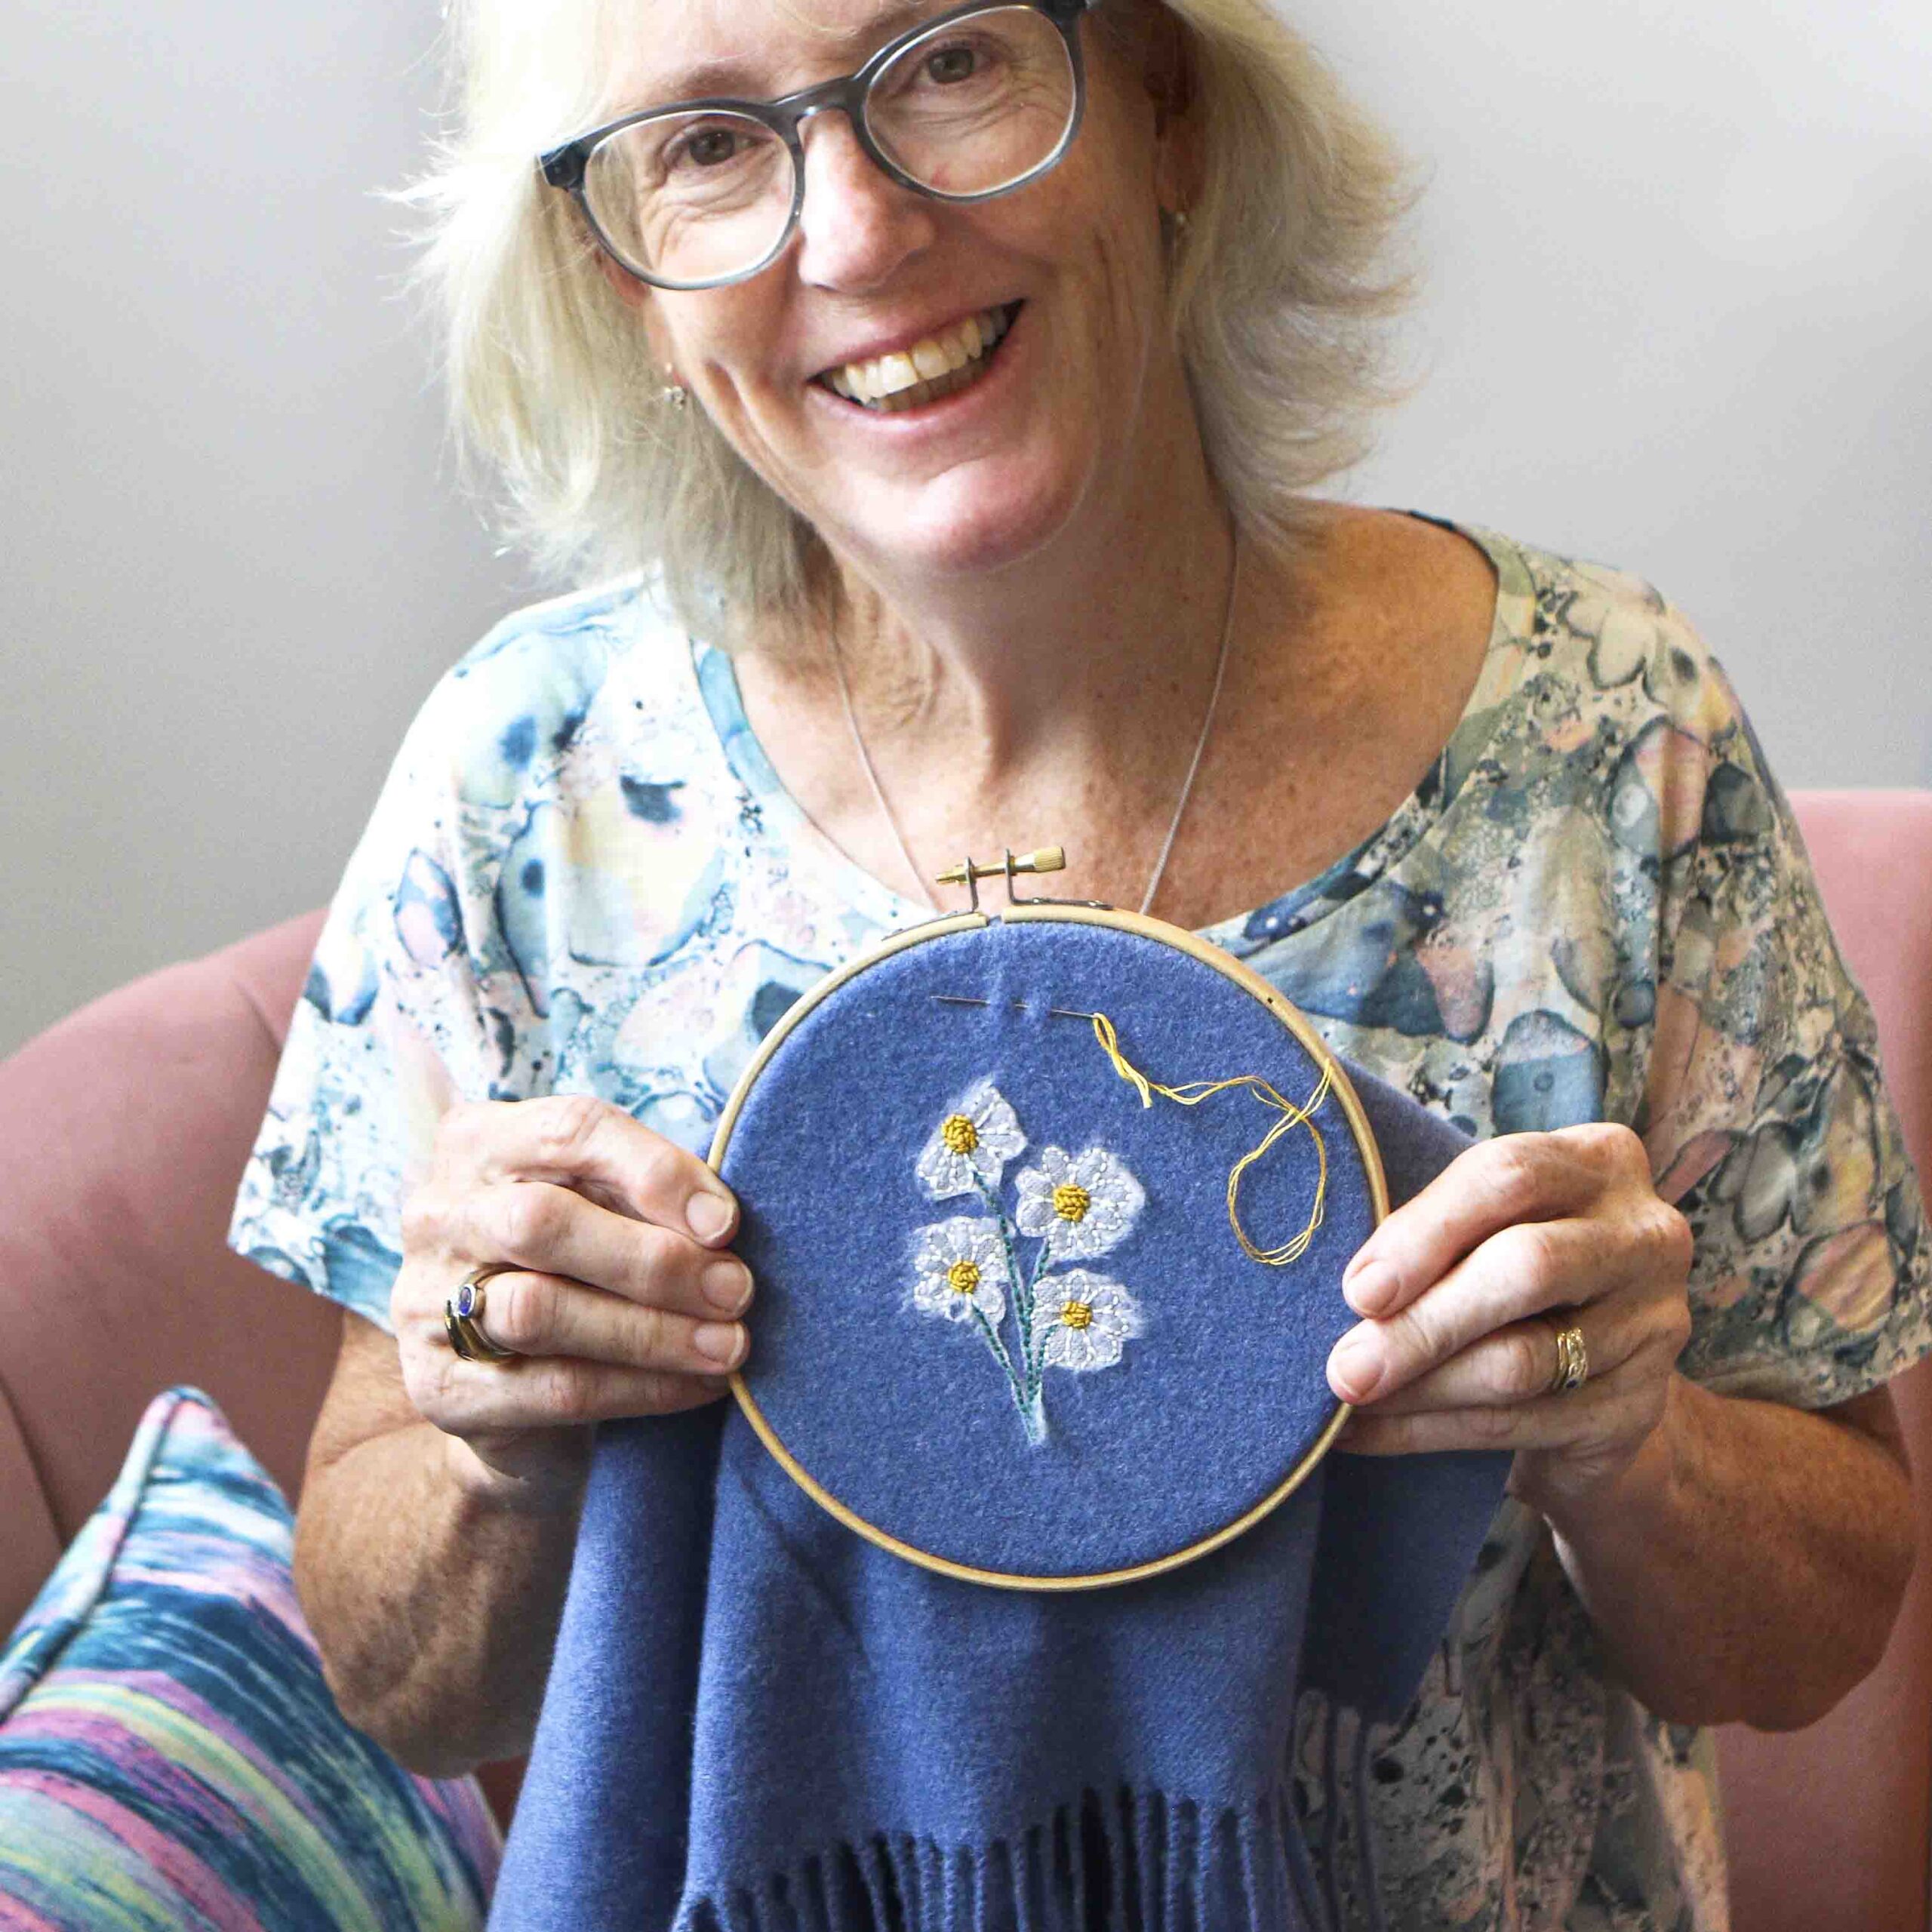 StephieAnn Birth flower scarf embroidery workshop Brighton